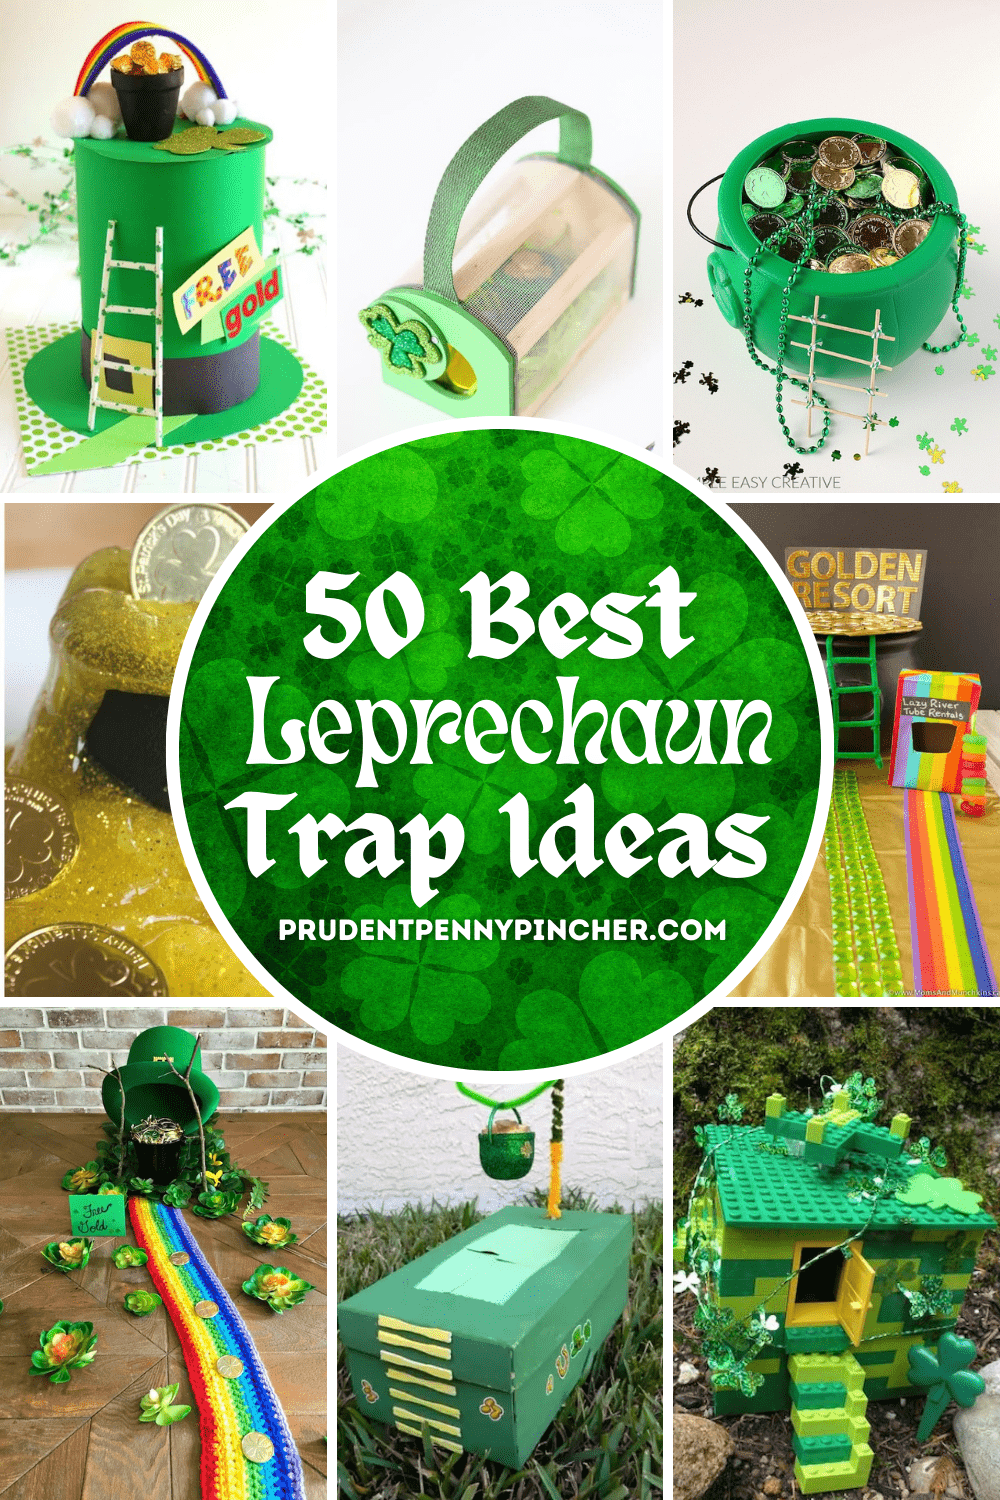 real leprechaun traps